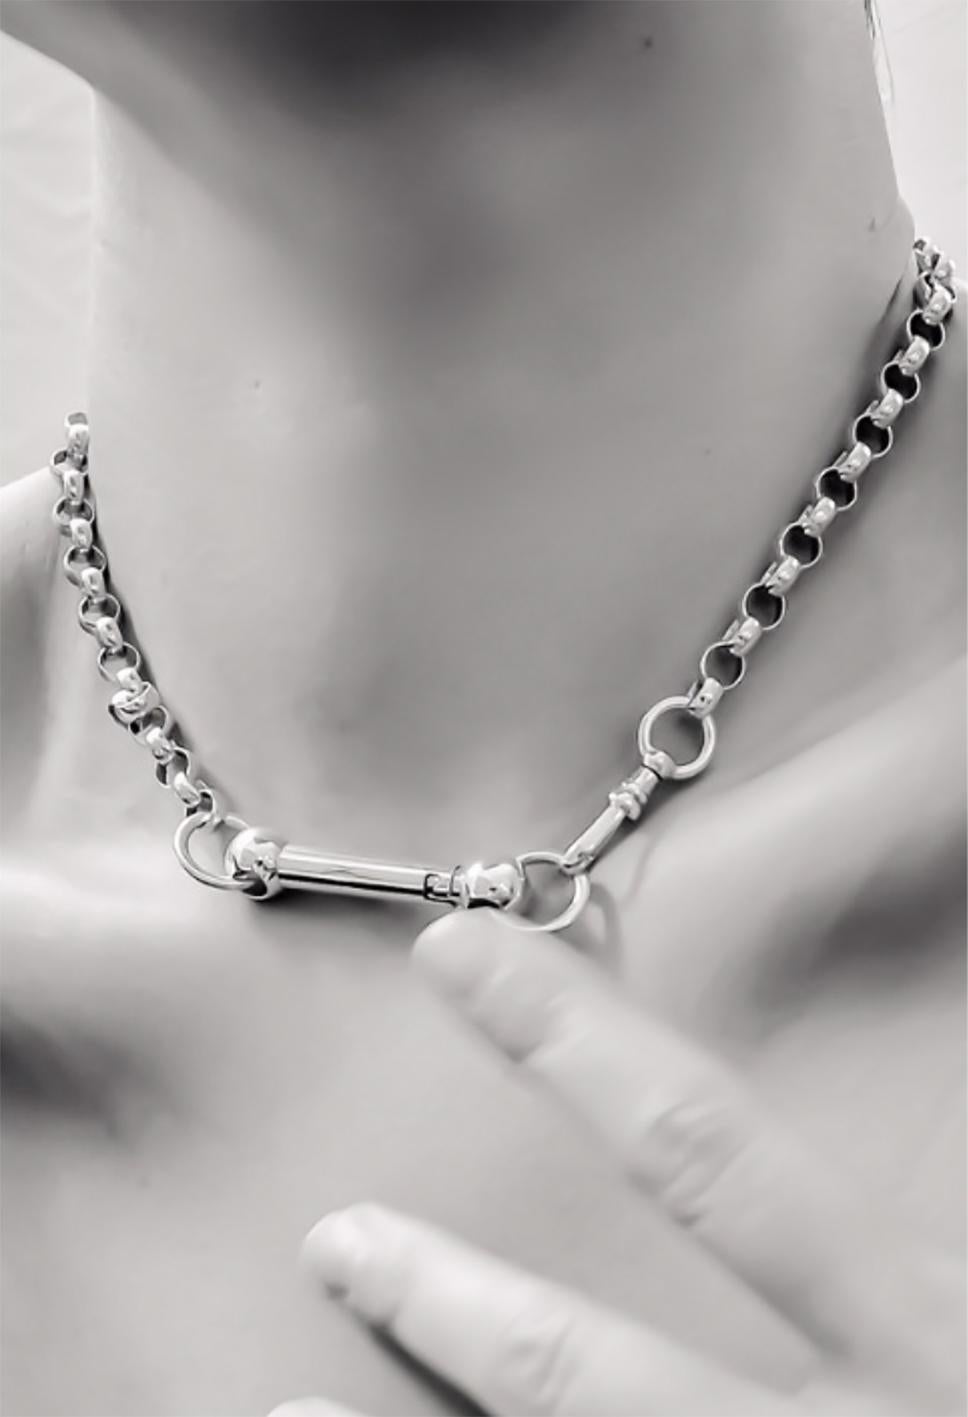 mantra necklace pendant